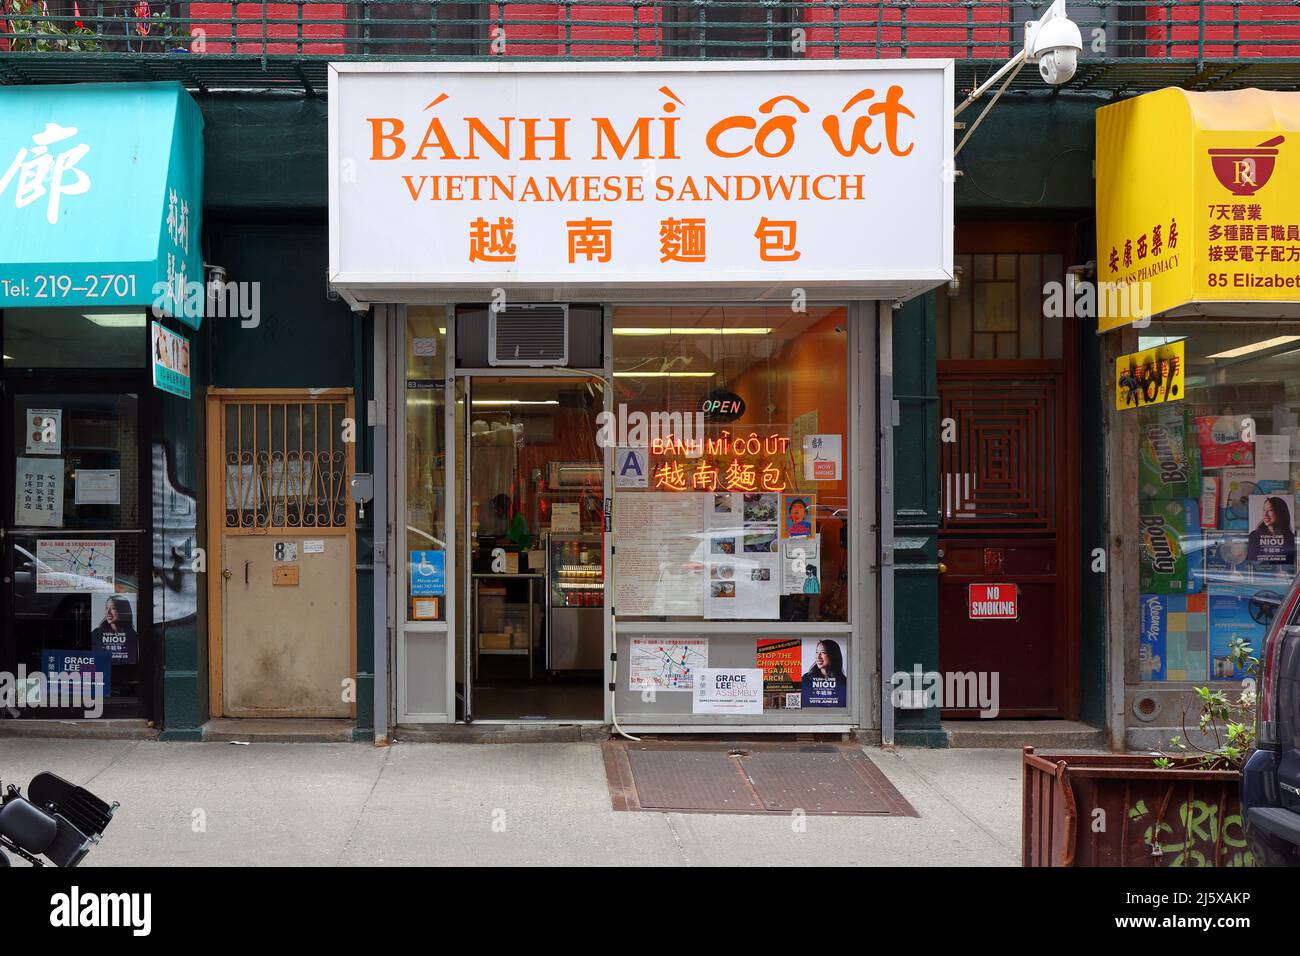 Banh mi Co Ut, 83 Elizabeth St, New York, NYC foto di un paninoteca vietnamita a Manhattan Chinatown. Bánh Mì Cô út Foto Stock